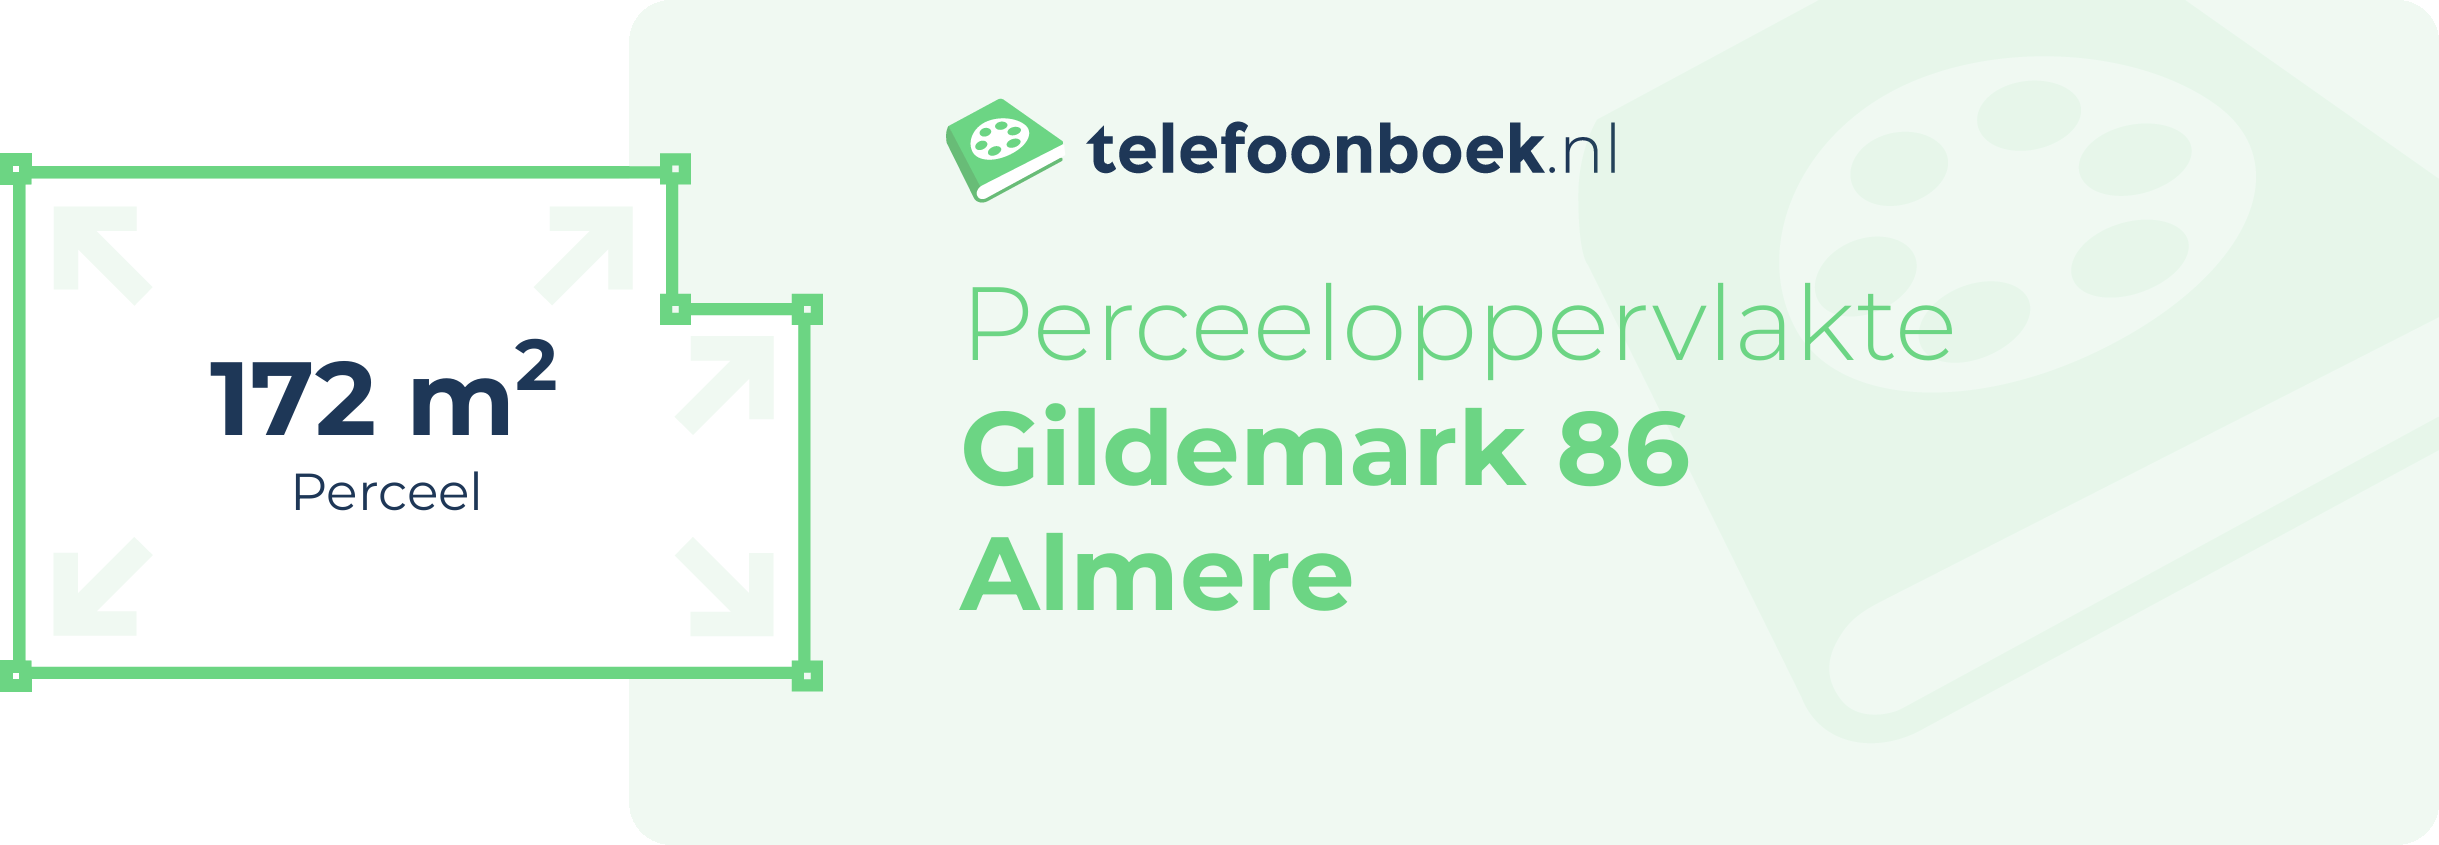 Perceeloppervlakte Gildemark 86 Almere